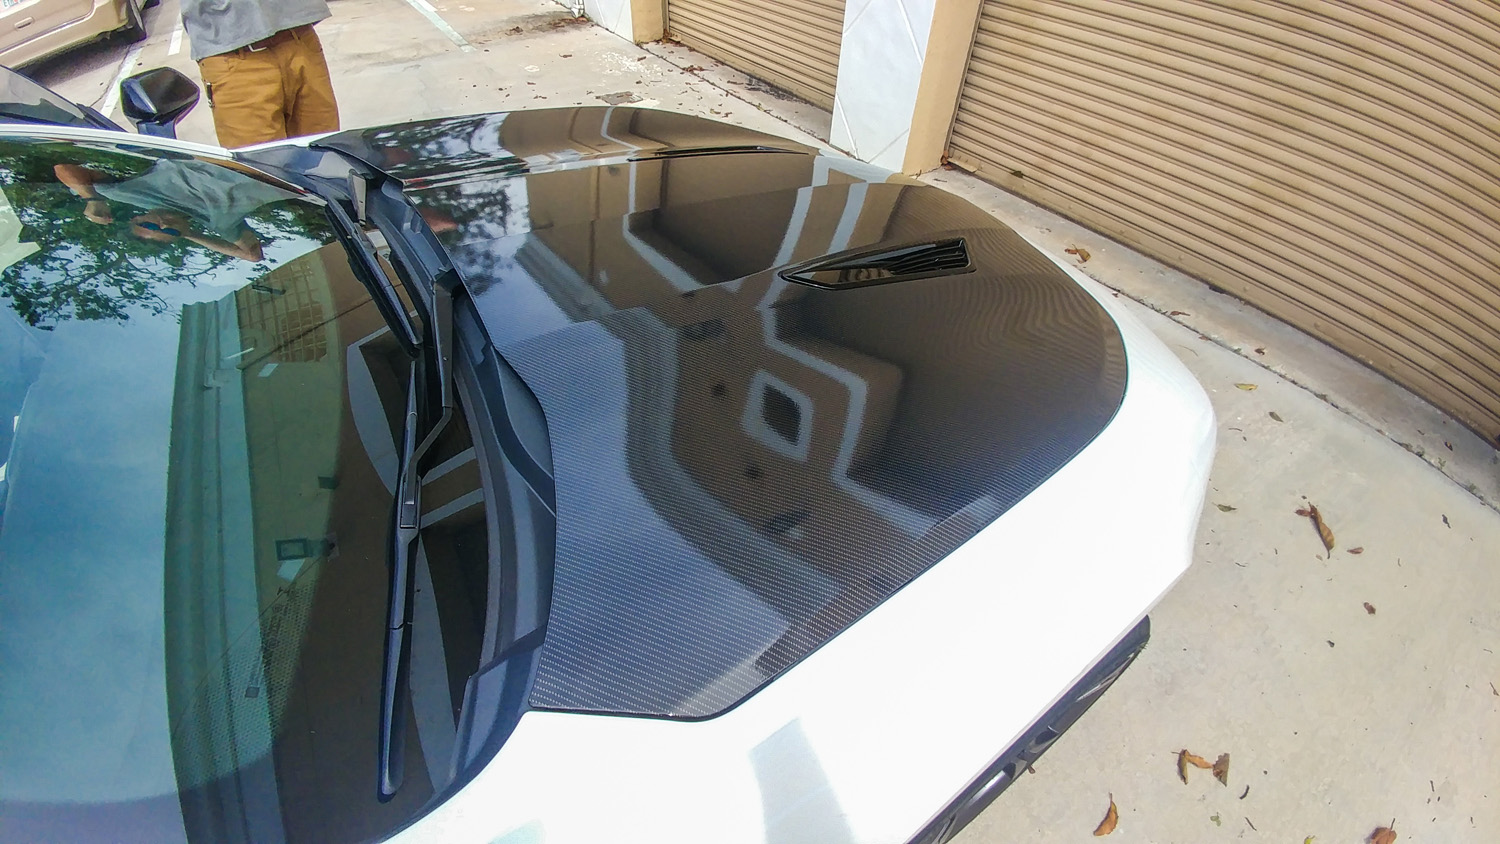 printed gloss carbon fiber vinyl wrap chevy camaro hood star car wraps